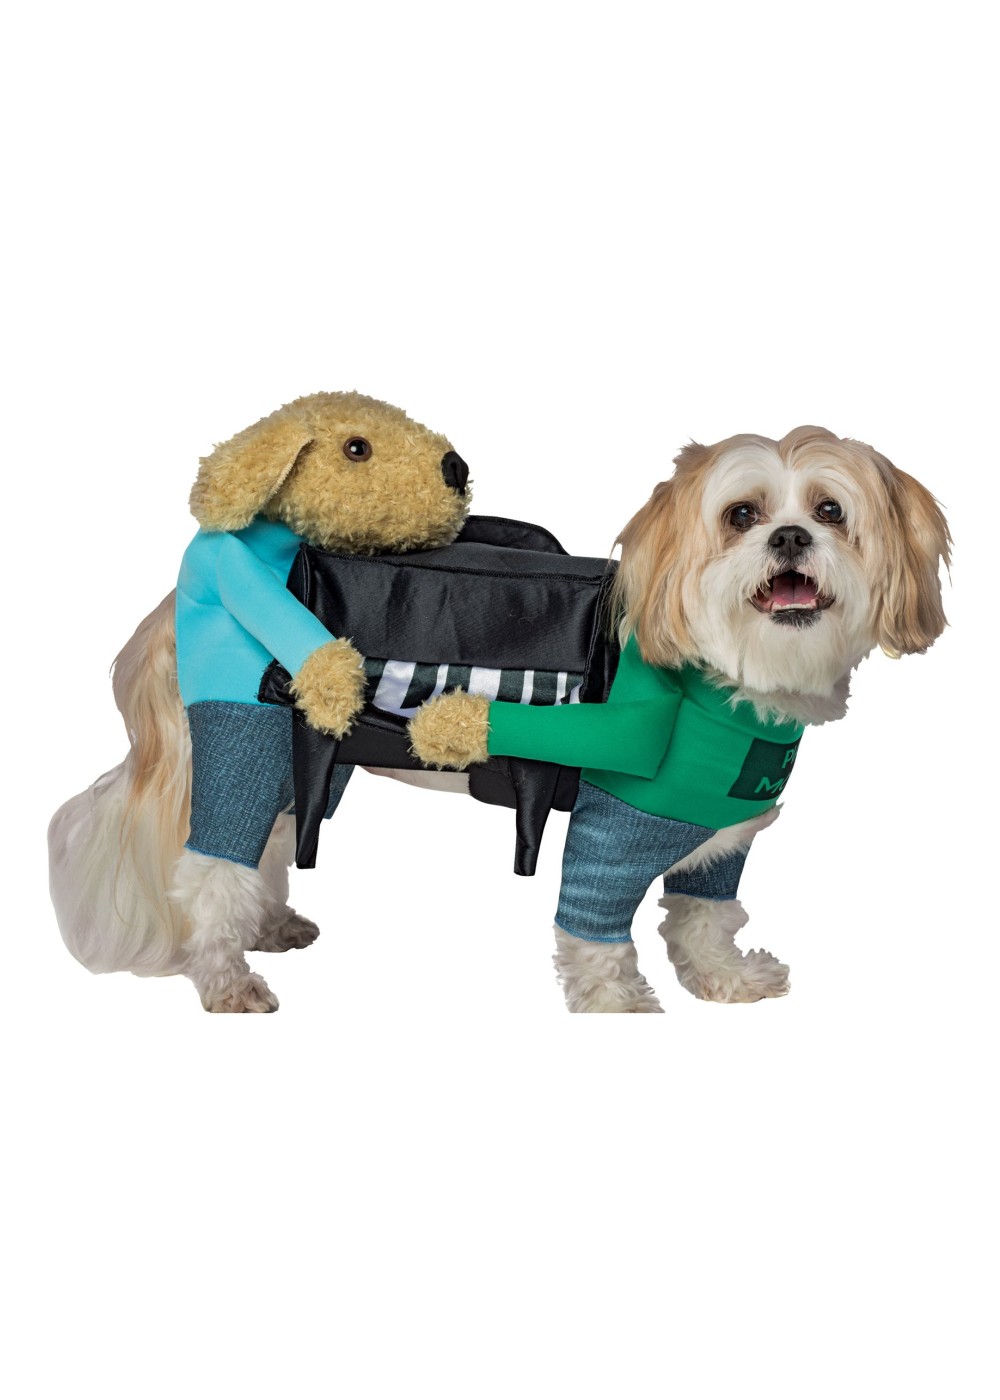 Piano Dog Costume